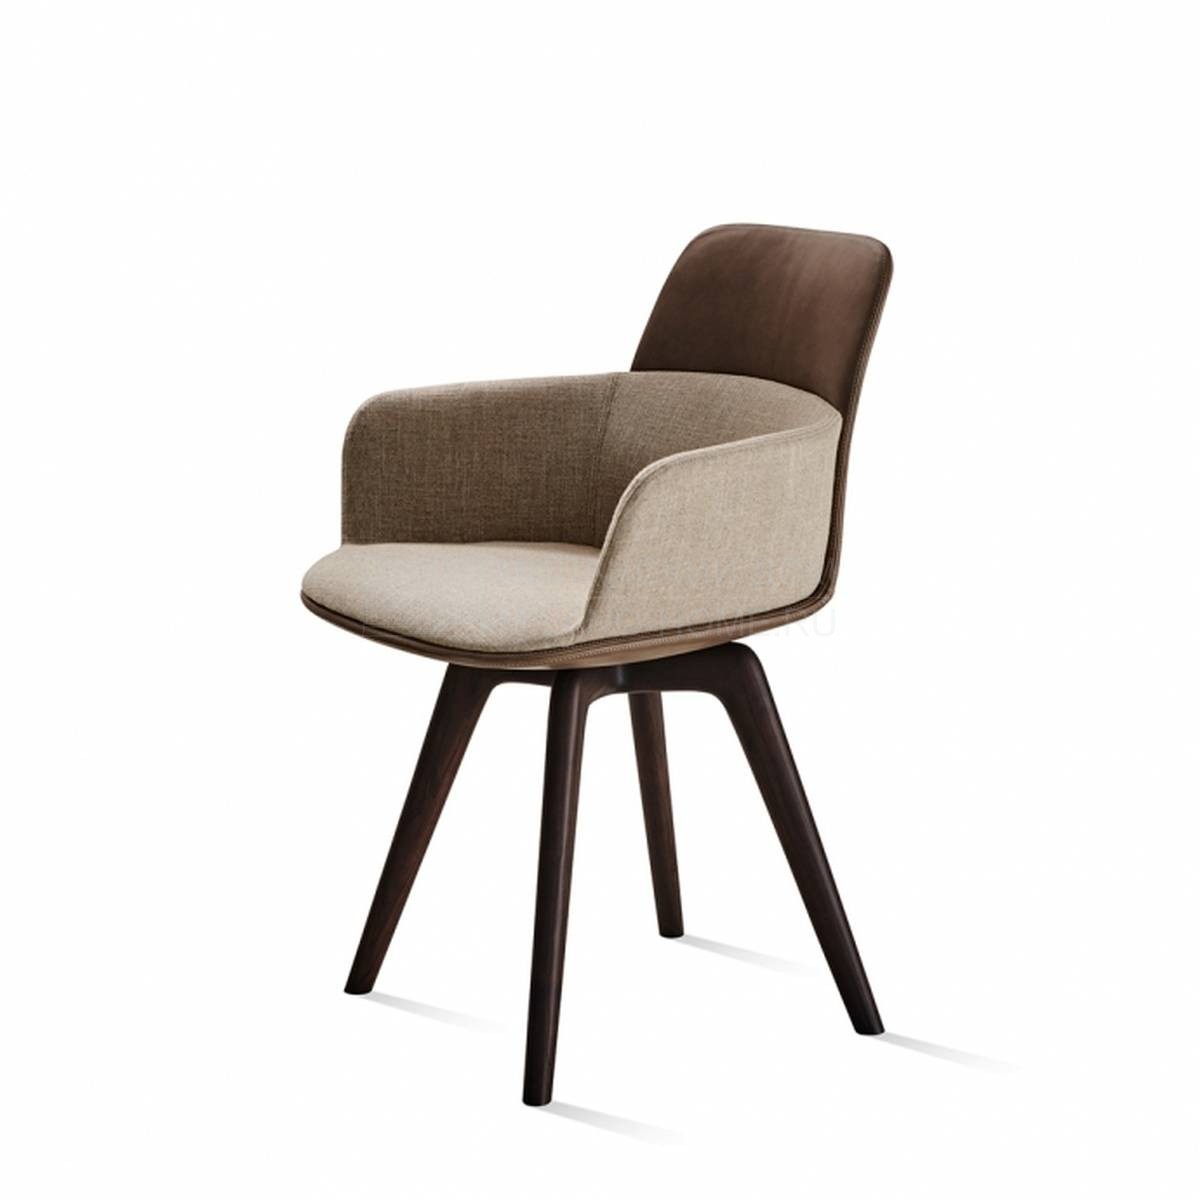 Полукресло Barbican chair two из Италии фабрики MOLTENI